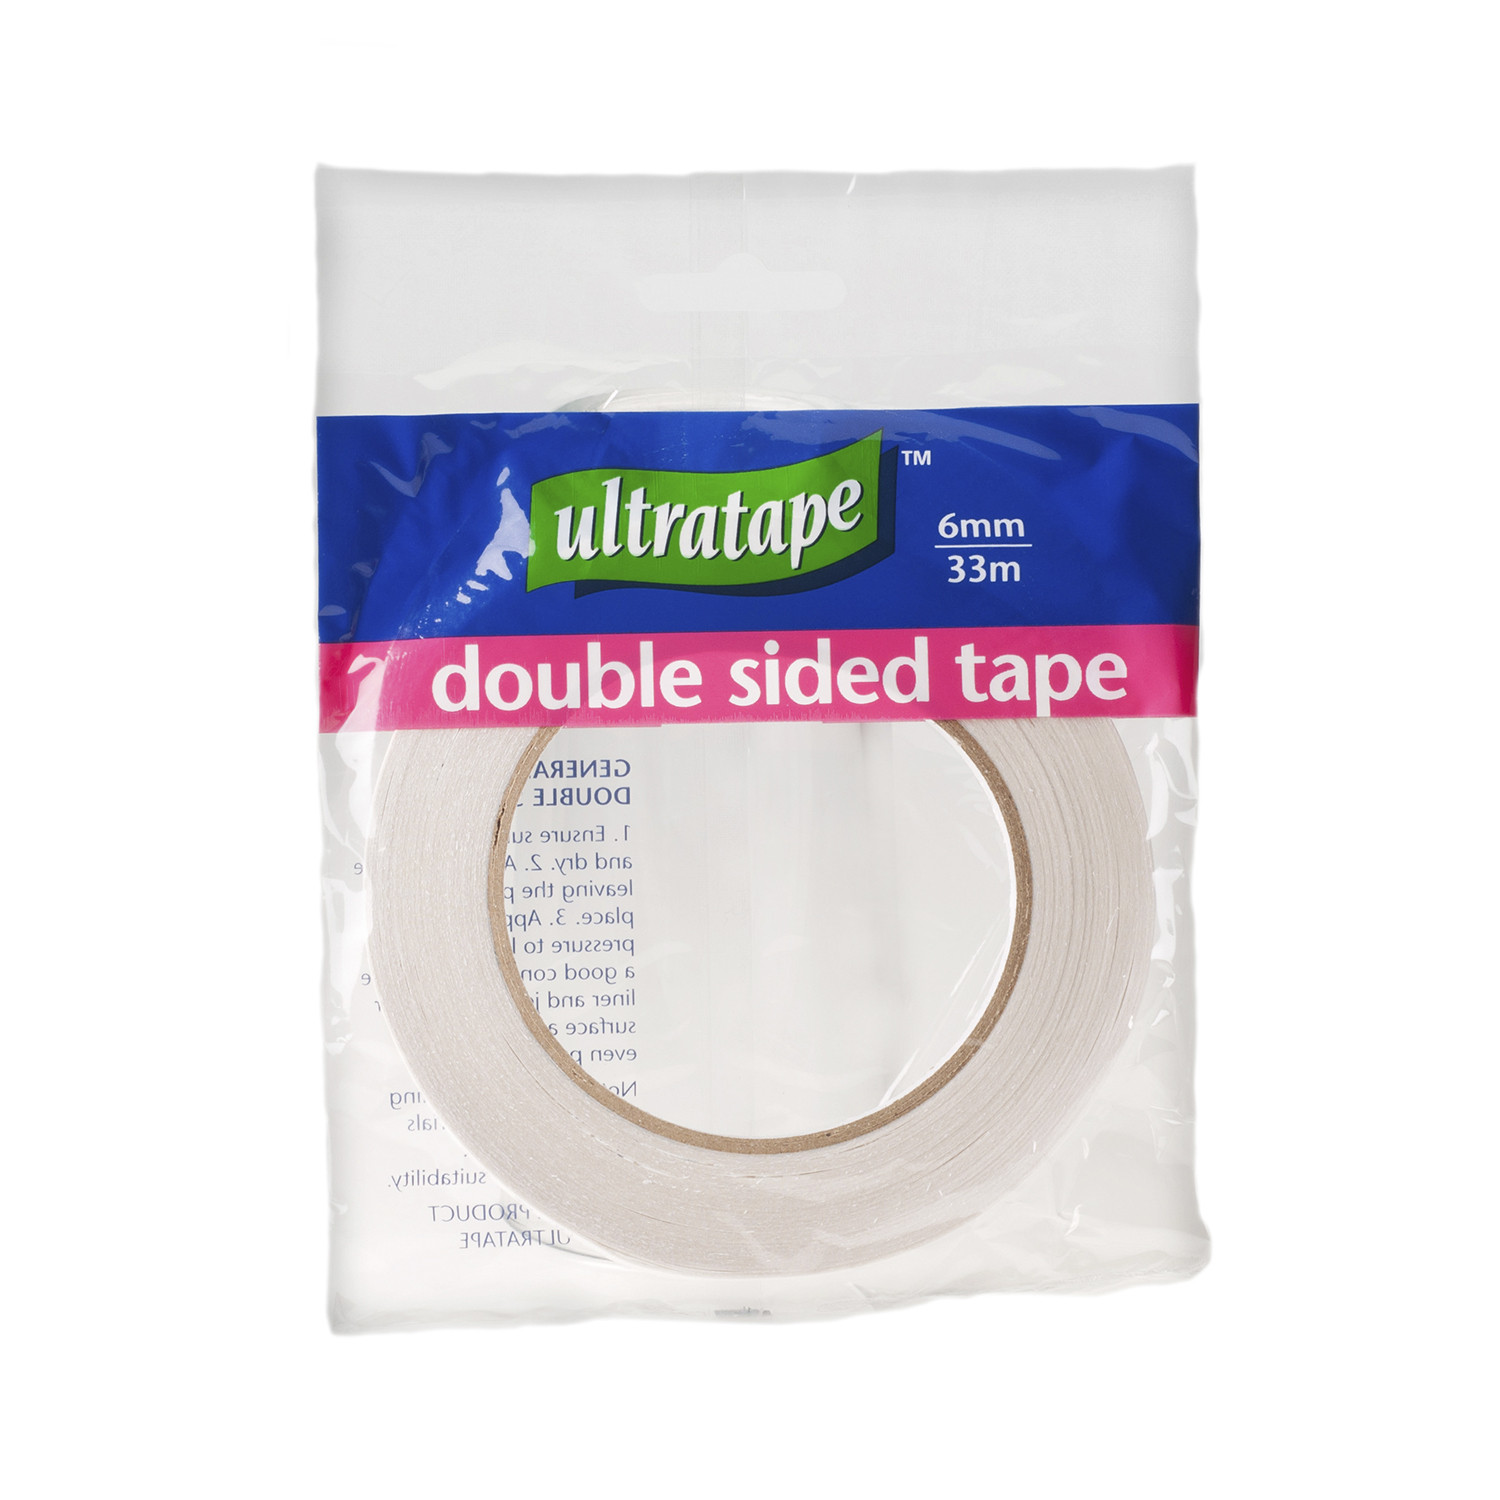 Ultratape Double Sided Tape Image